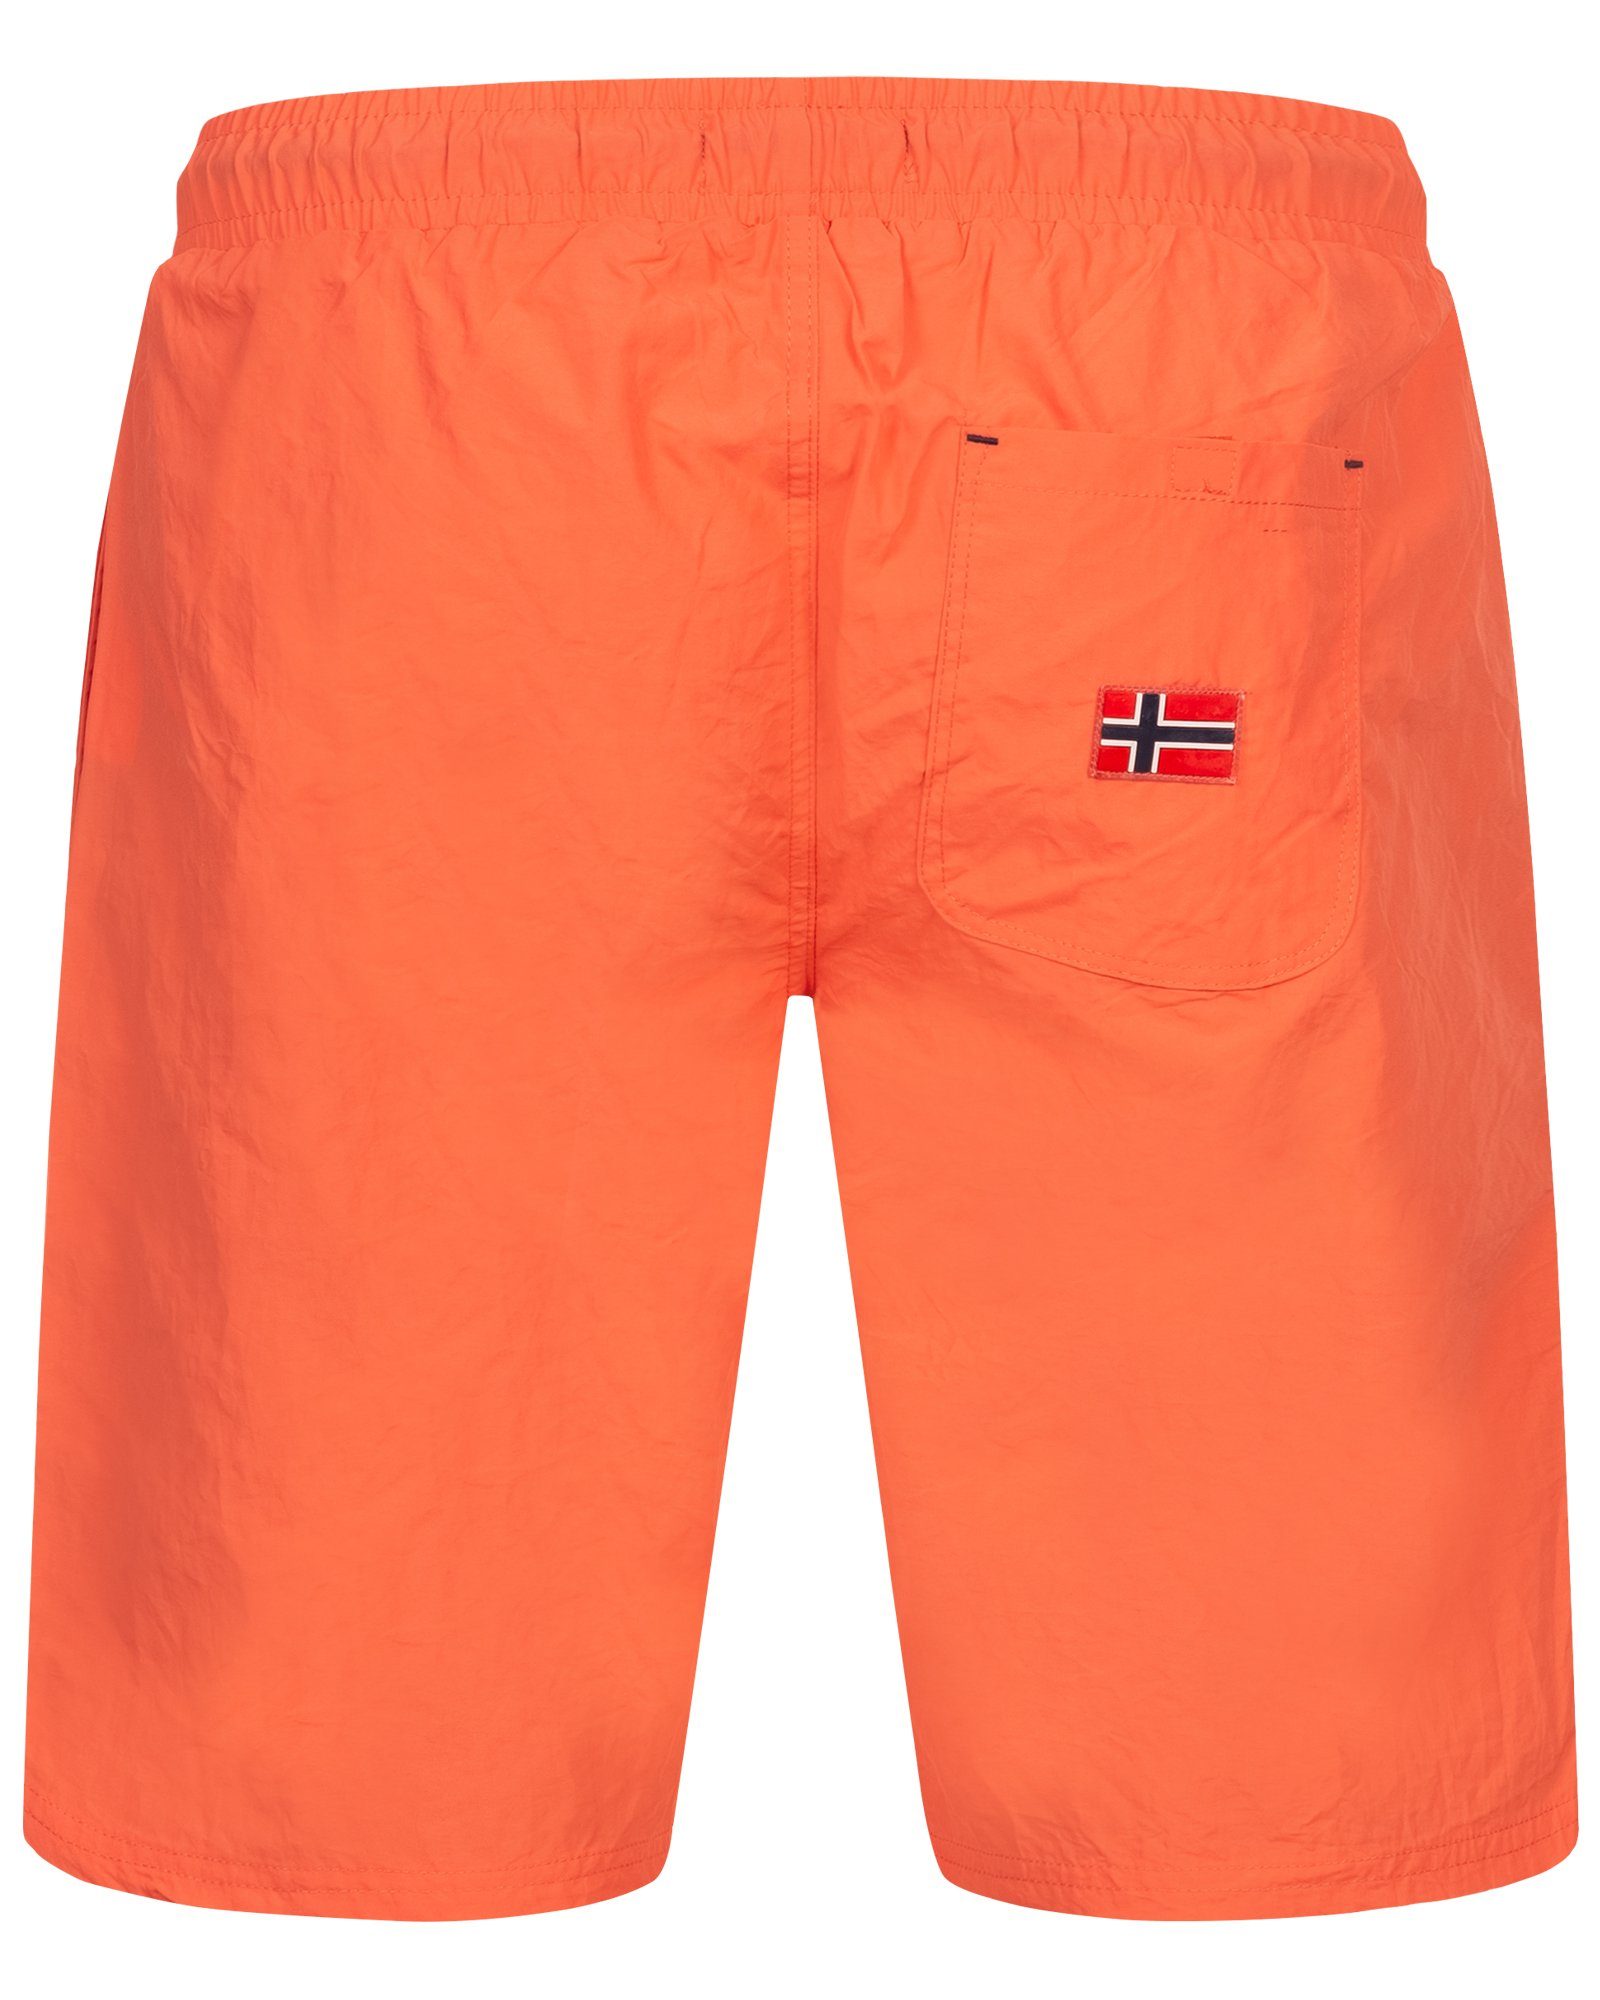 Geographical Norway Badeshorts Herren Bade Hose Shorts Shorts Beach Sommer Coral Bade Bermuda Lang Schwimm